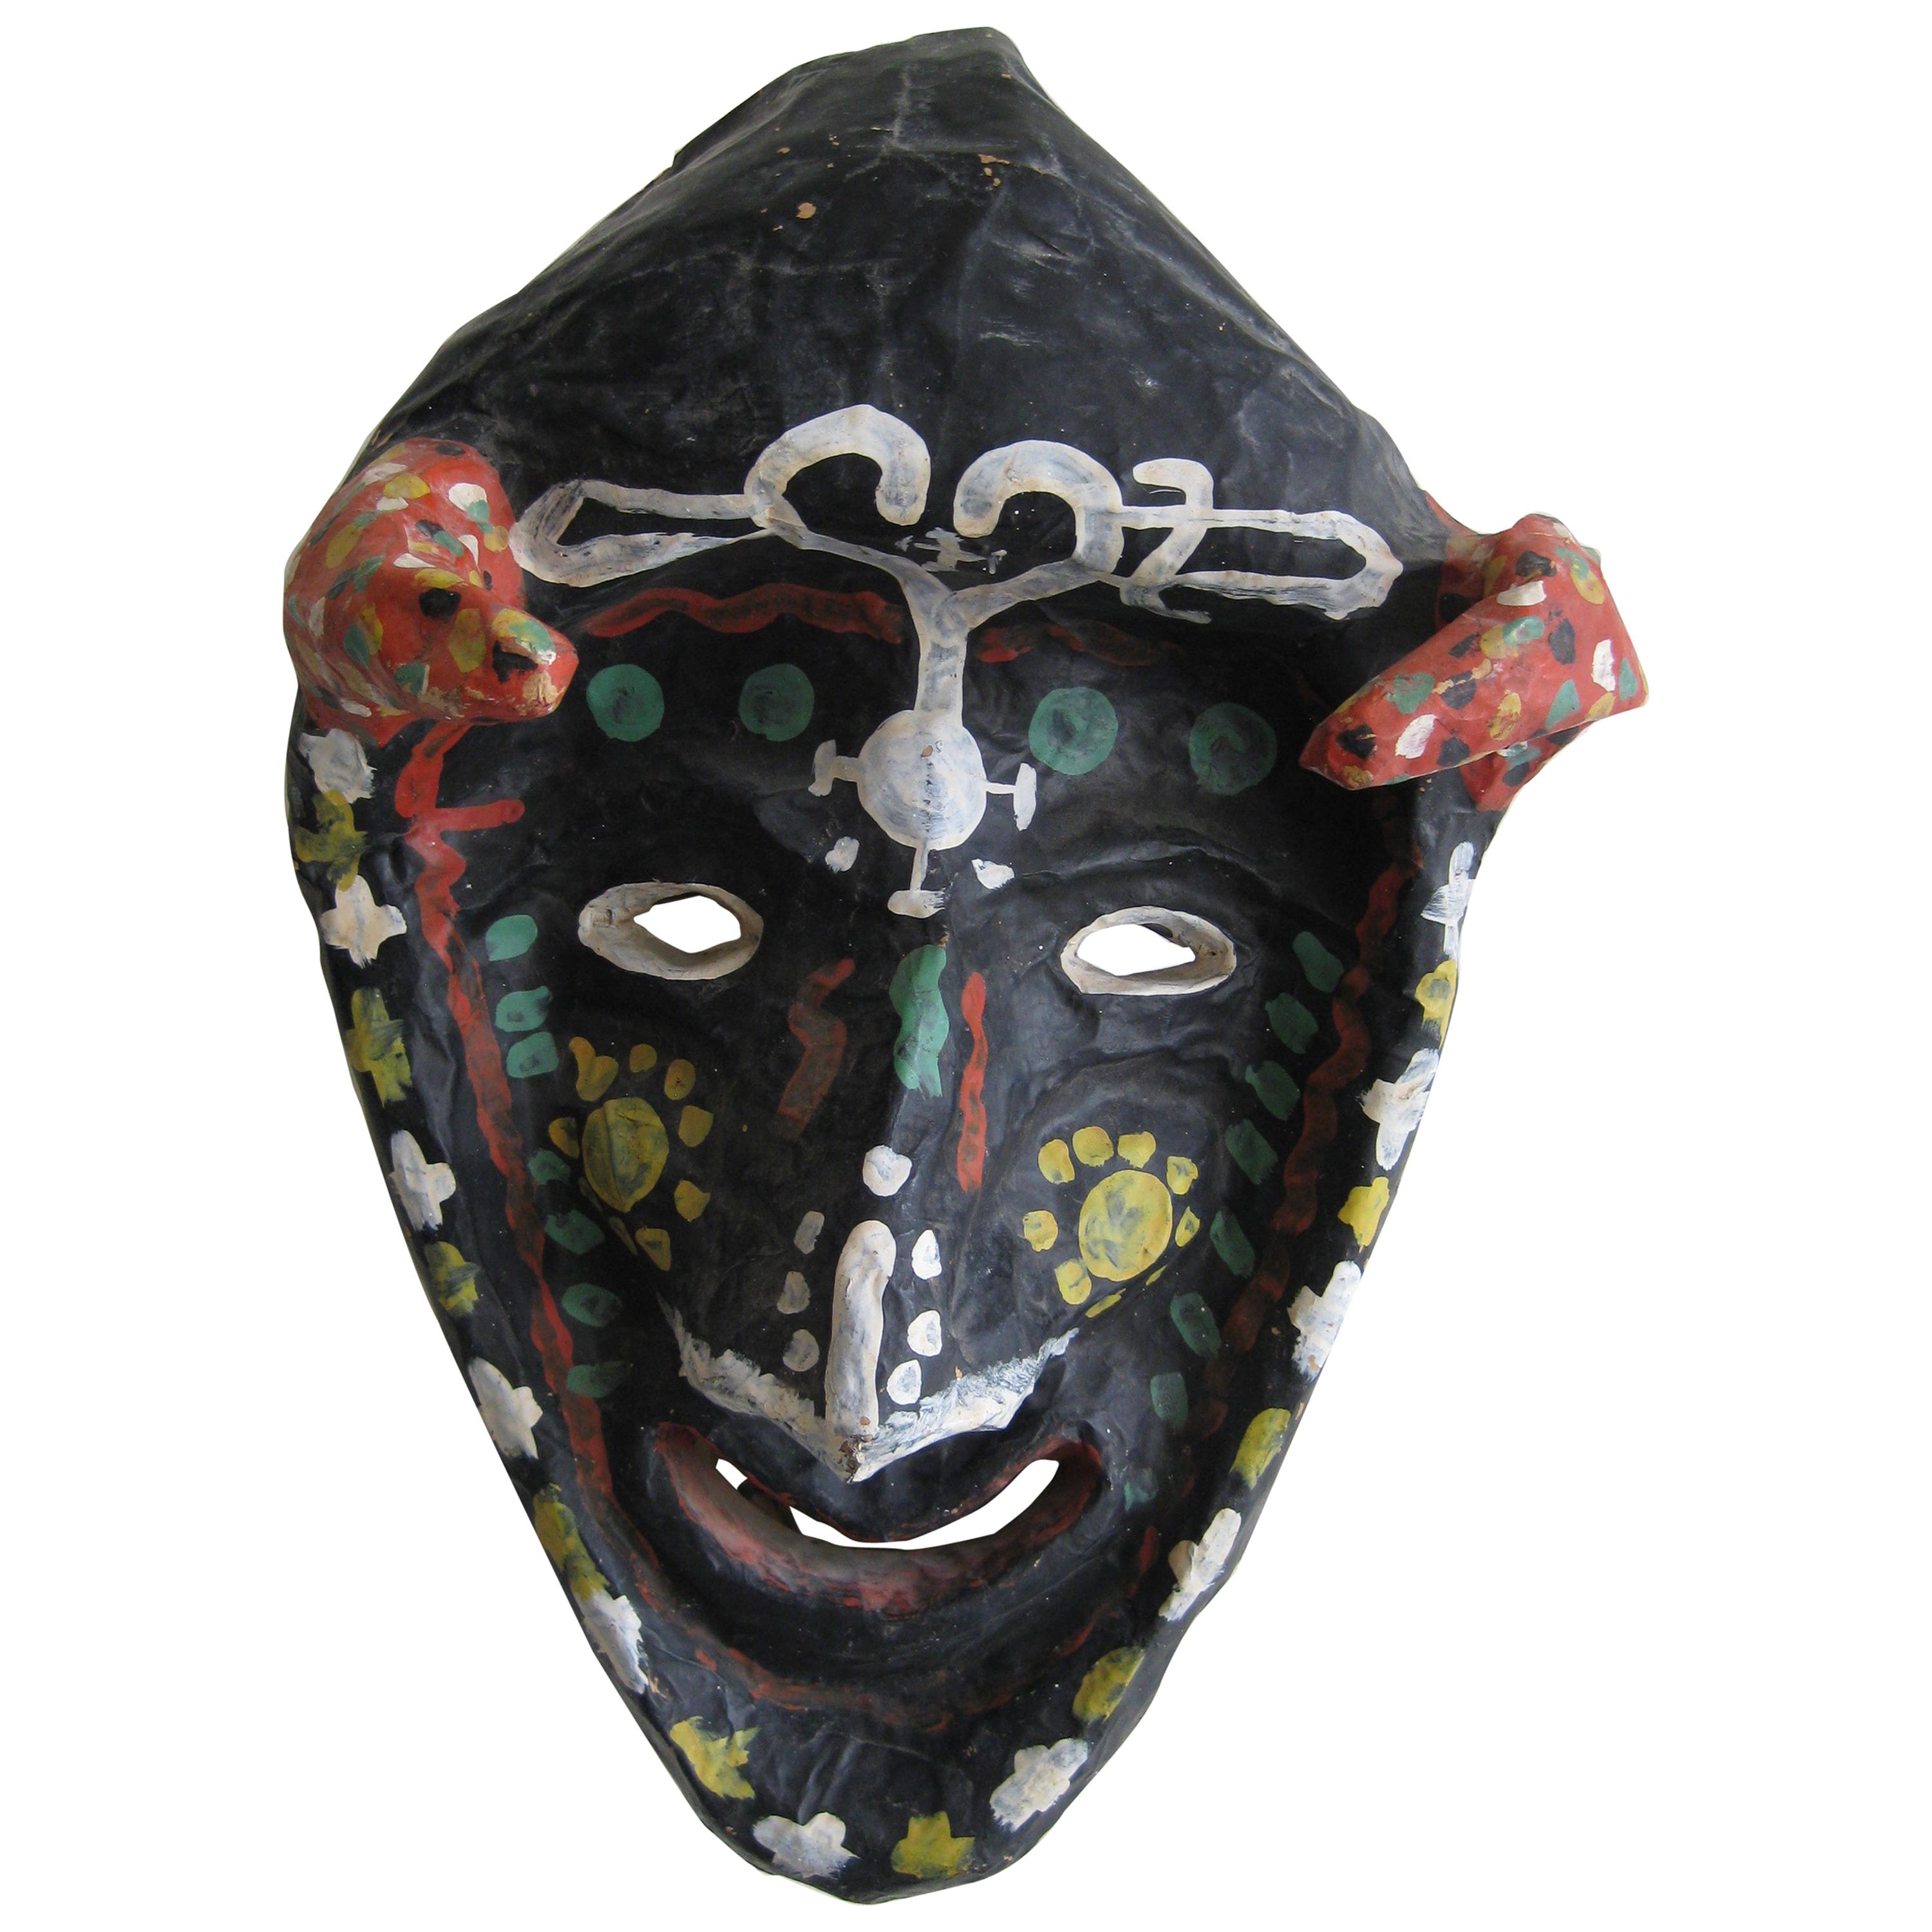 Masque de costume Voodoo d'Halloween en papier mâché d'art populaire ancien de Mardi Gras